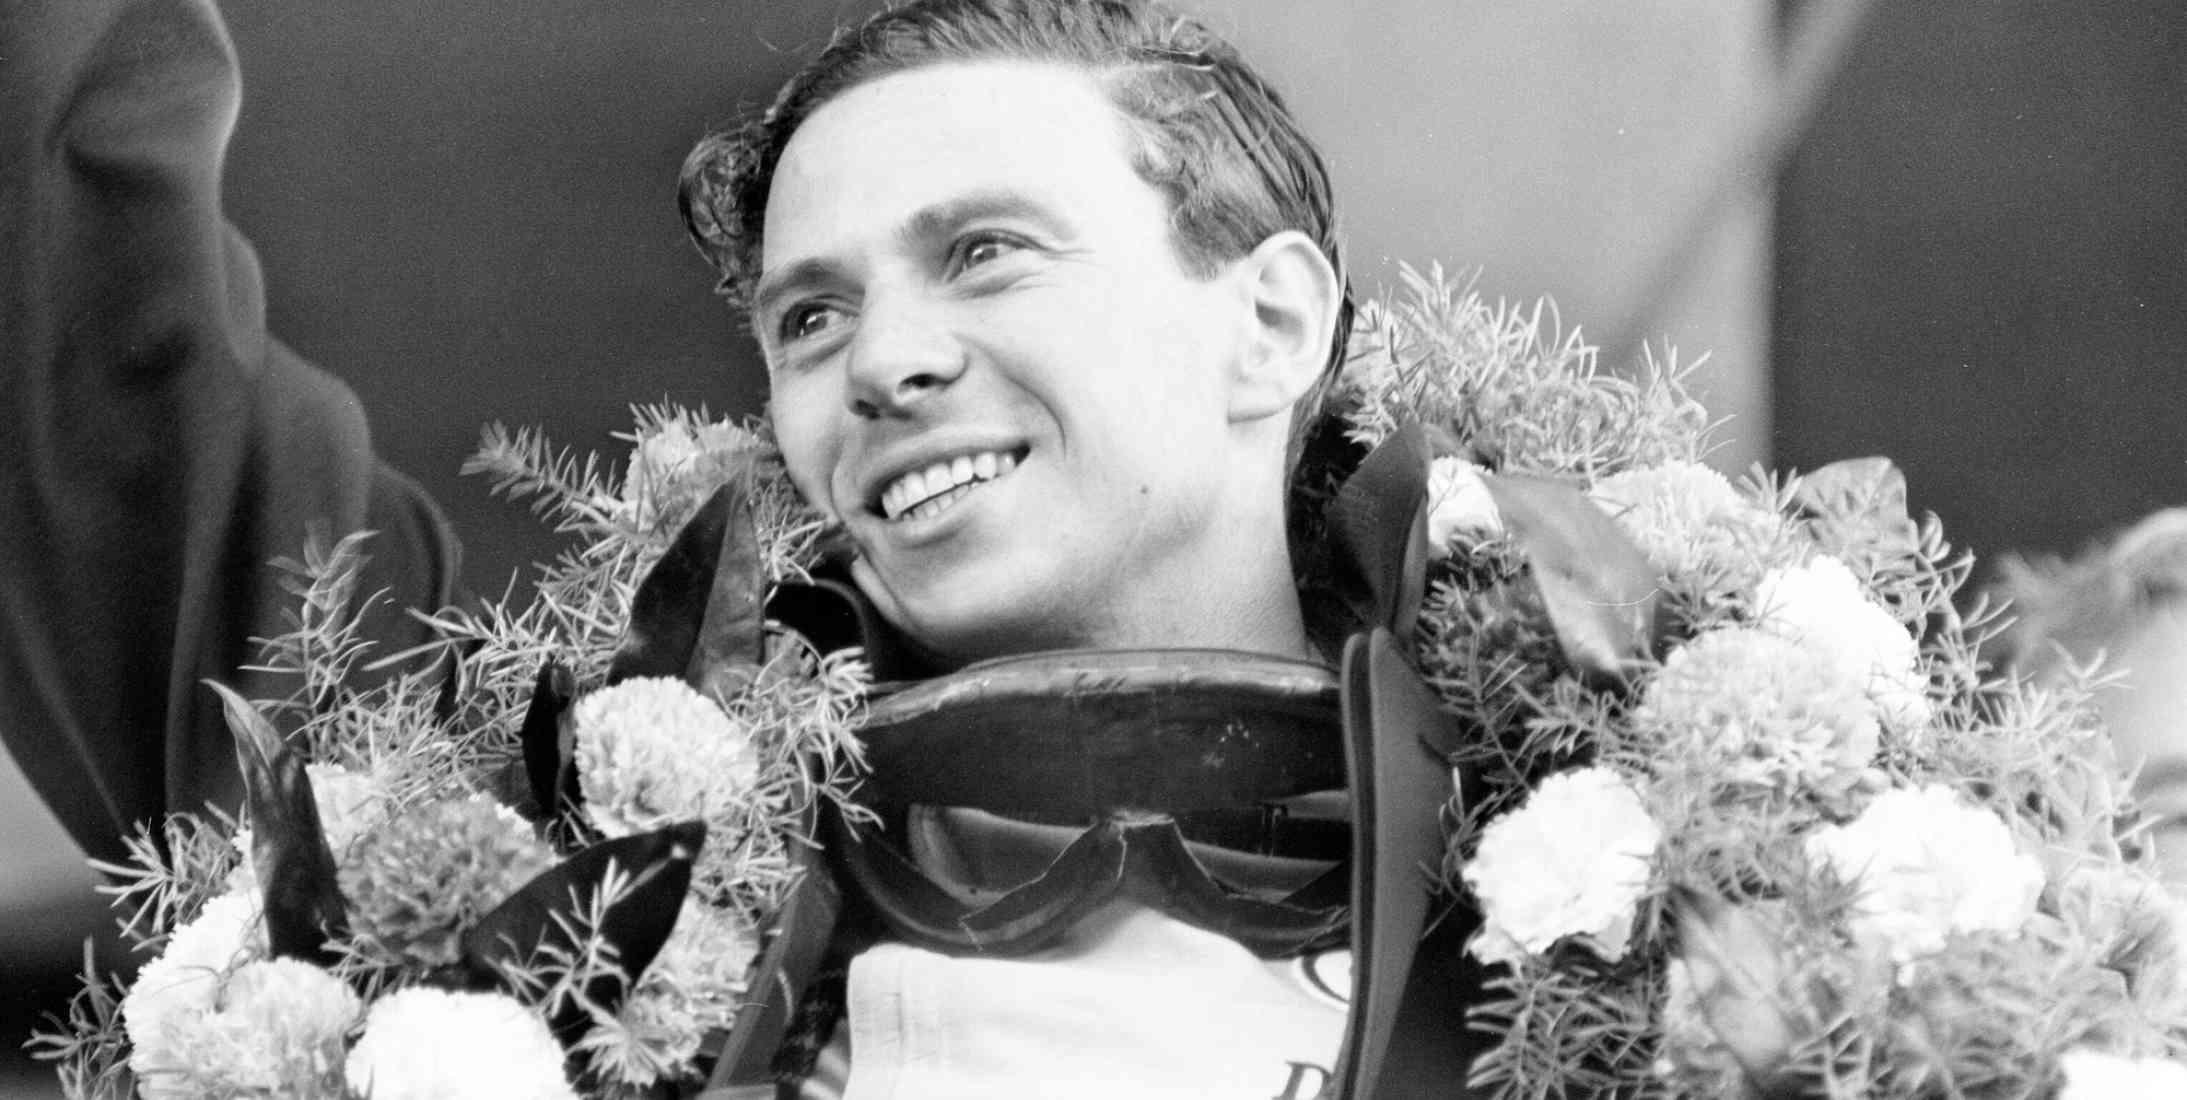 Jim Clark 1964 British Grand Prix win Brands Hatch